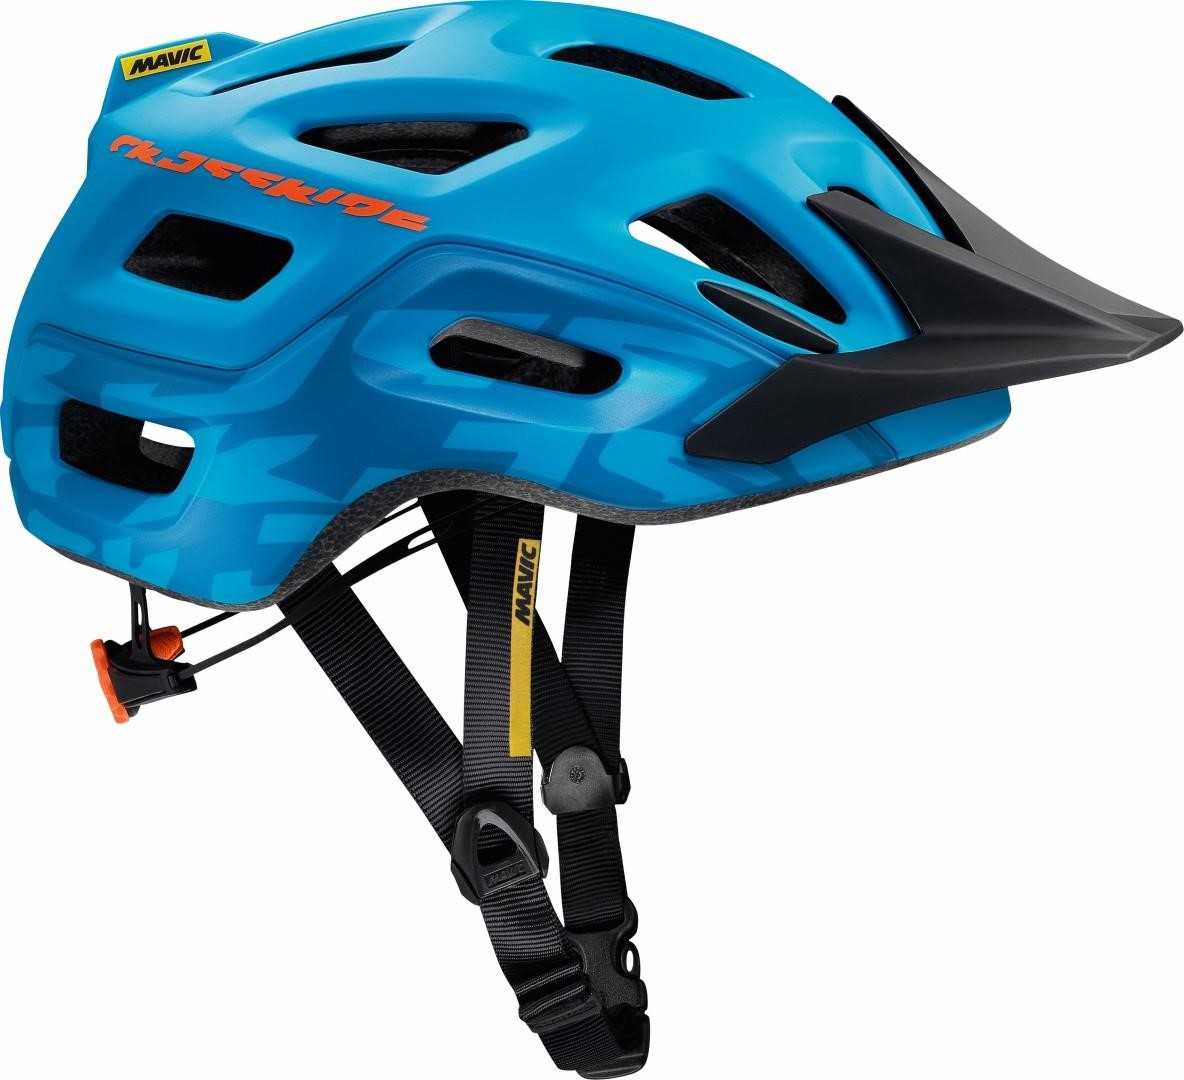 Mavic Crossride MTB Cycling Helmet 2017